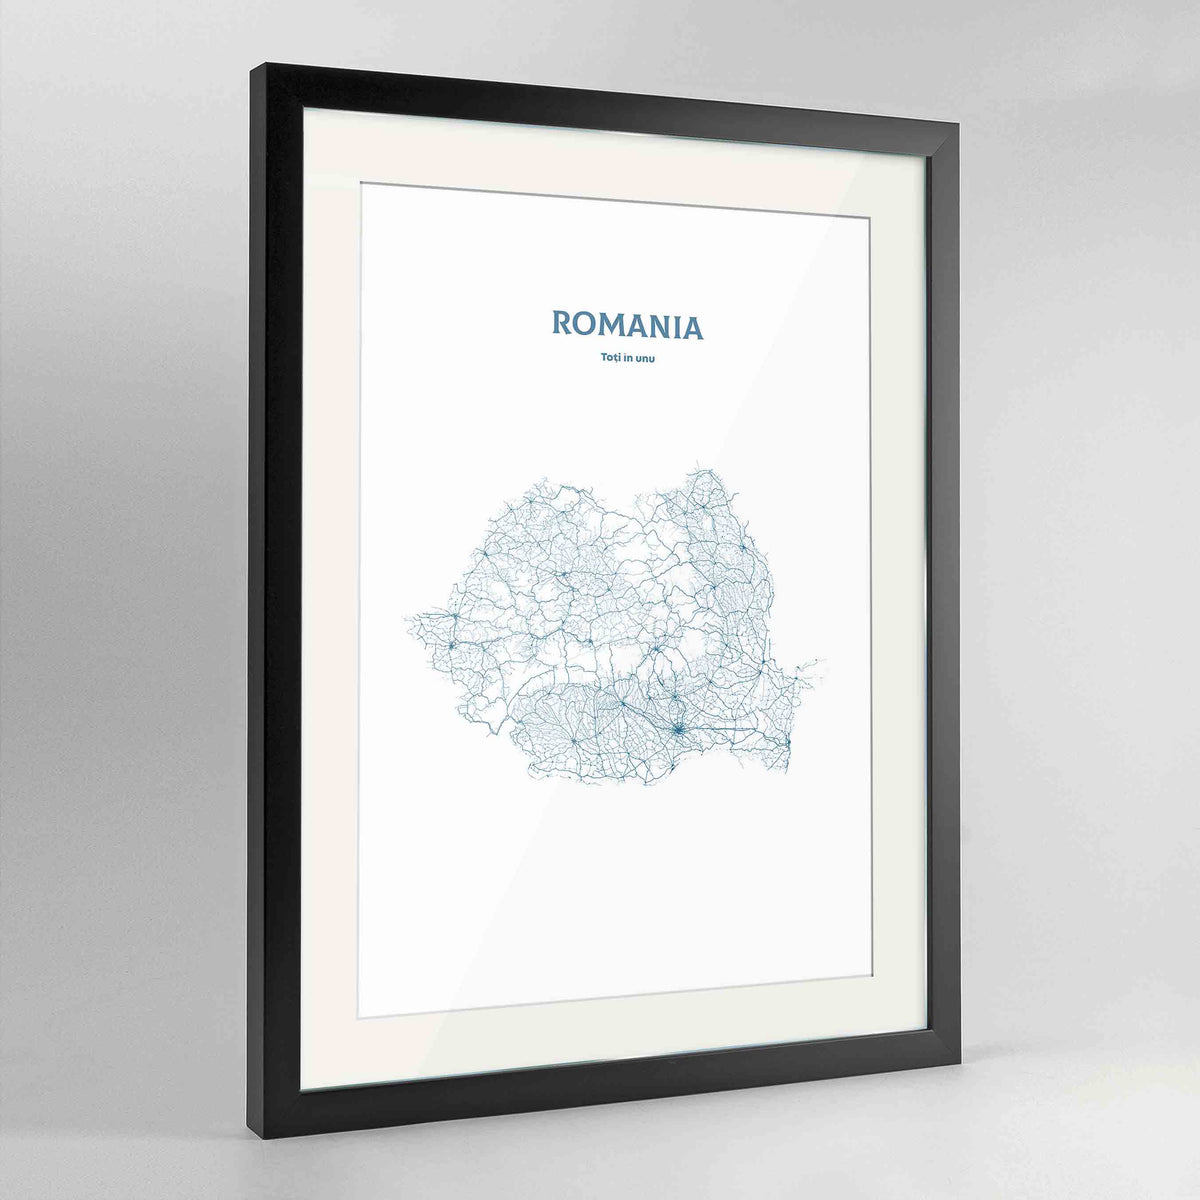 Romania - All Roads Art Print - Framed